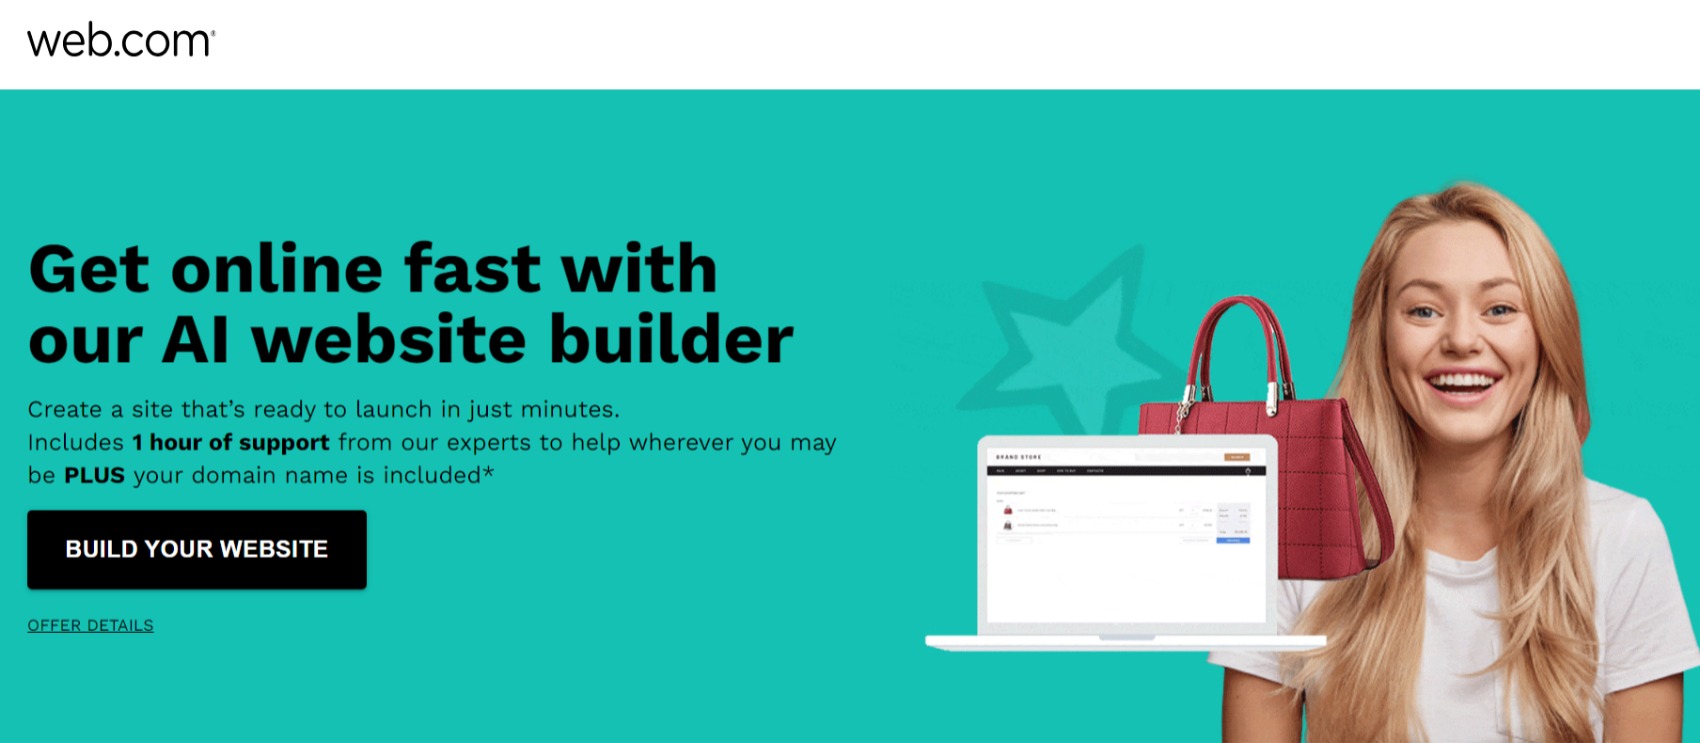 Web.com - Best Rated Website Builders